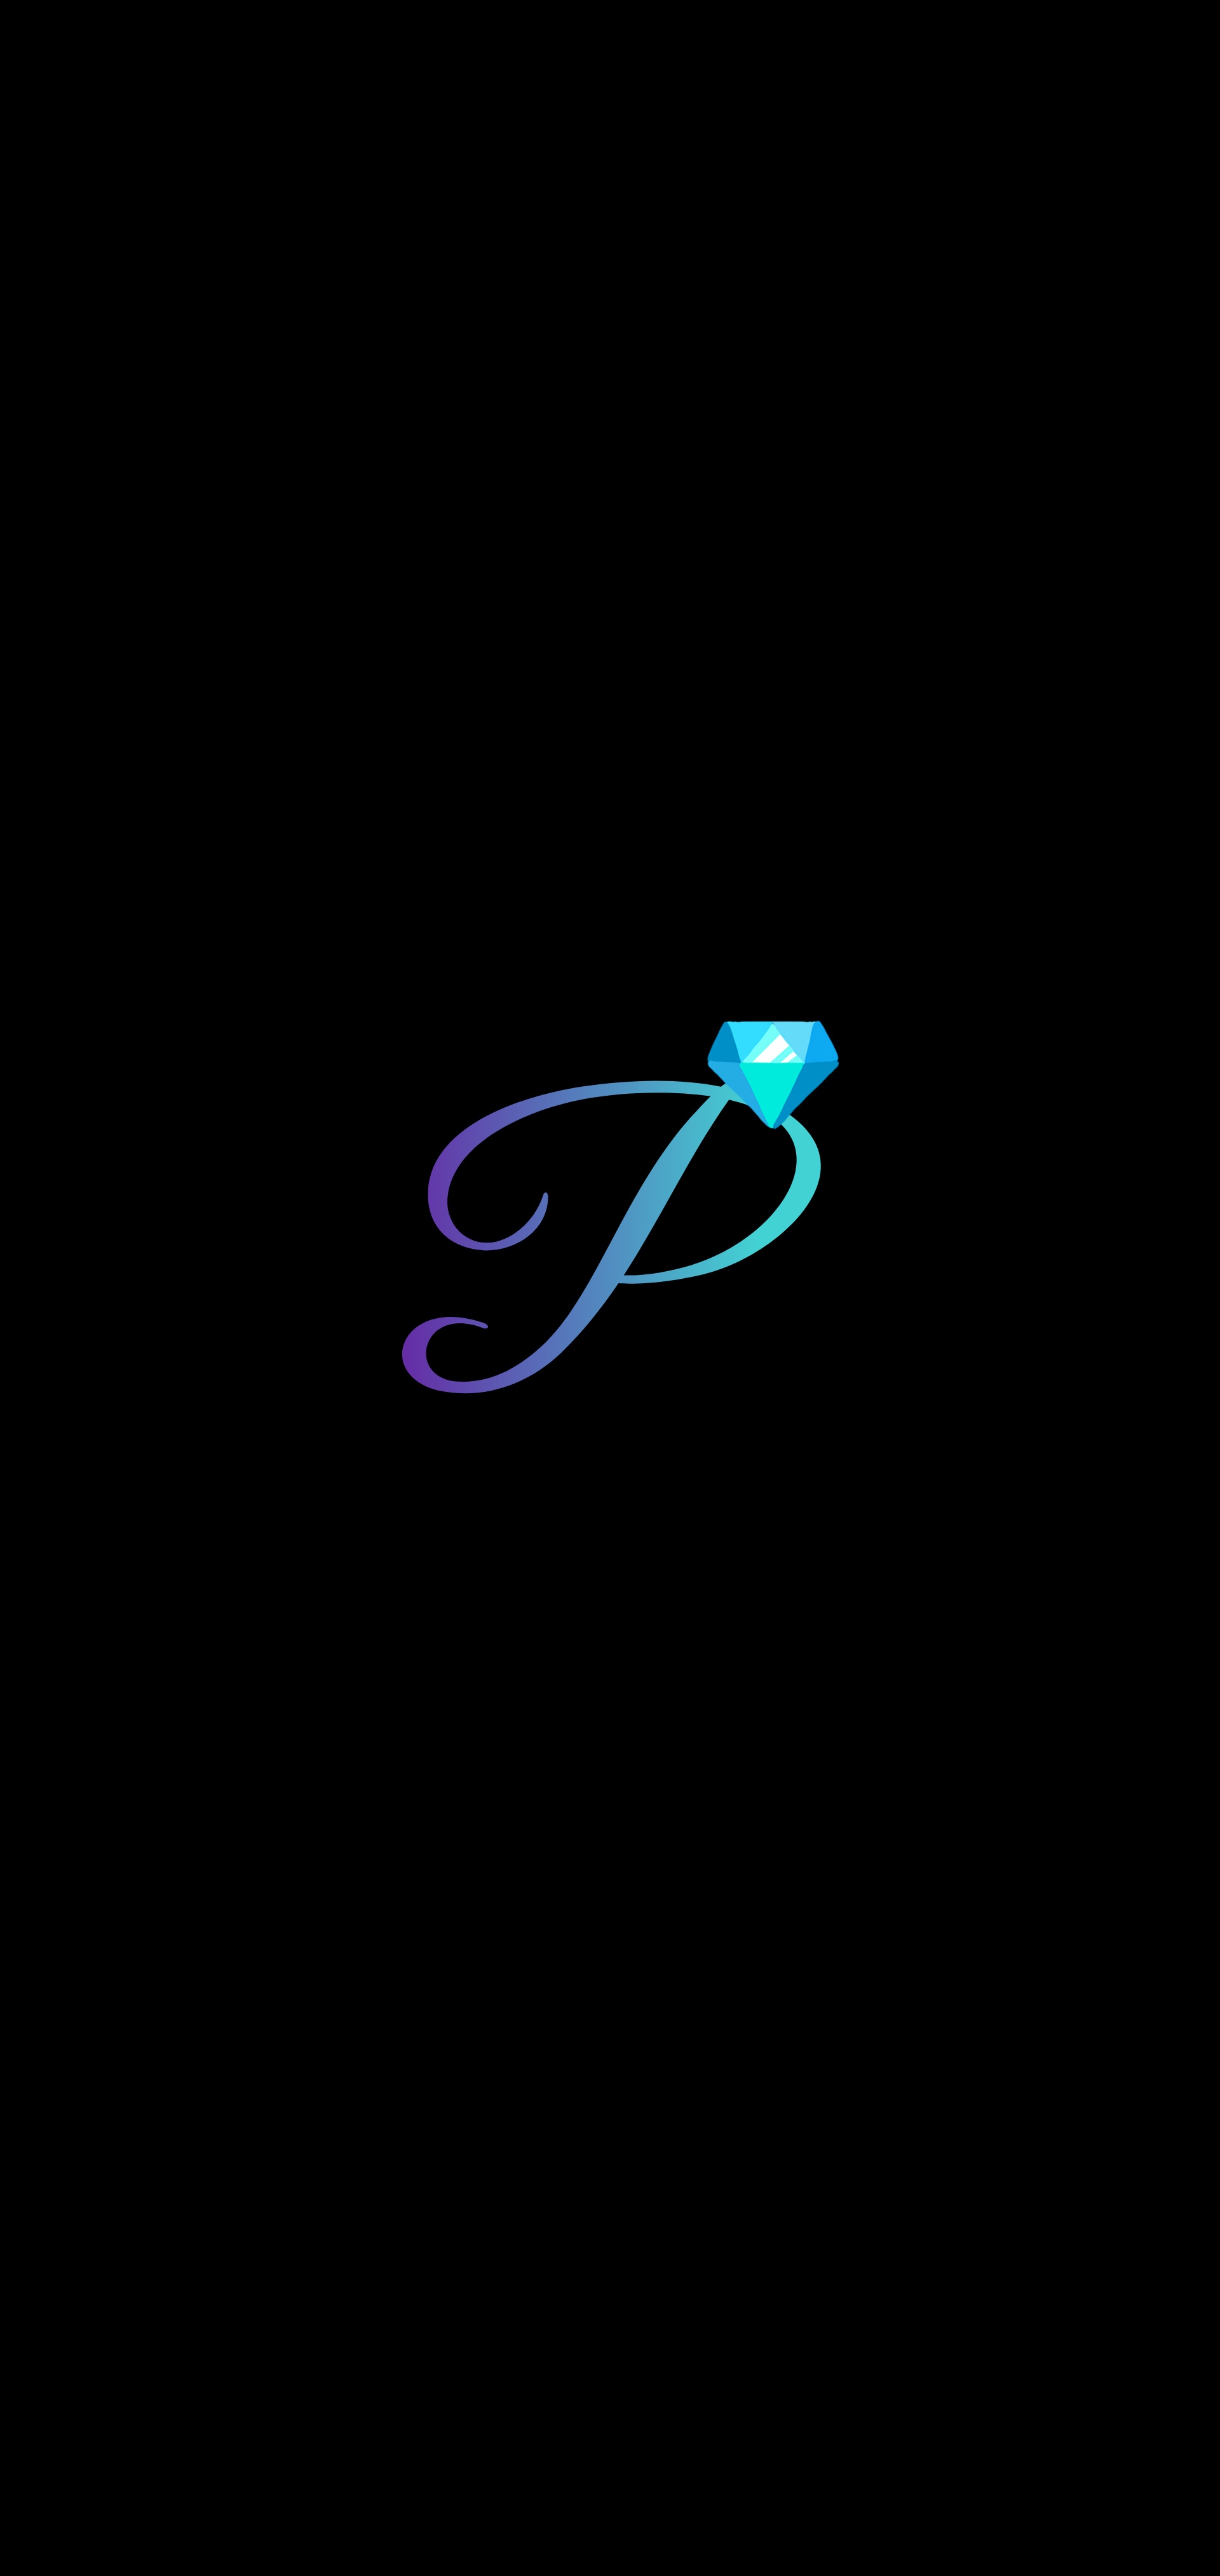 P Letter Design With Diamond